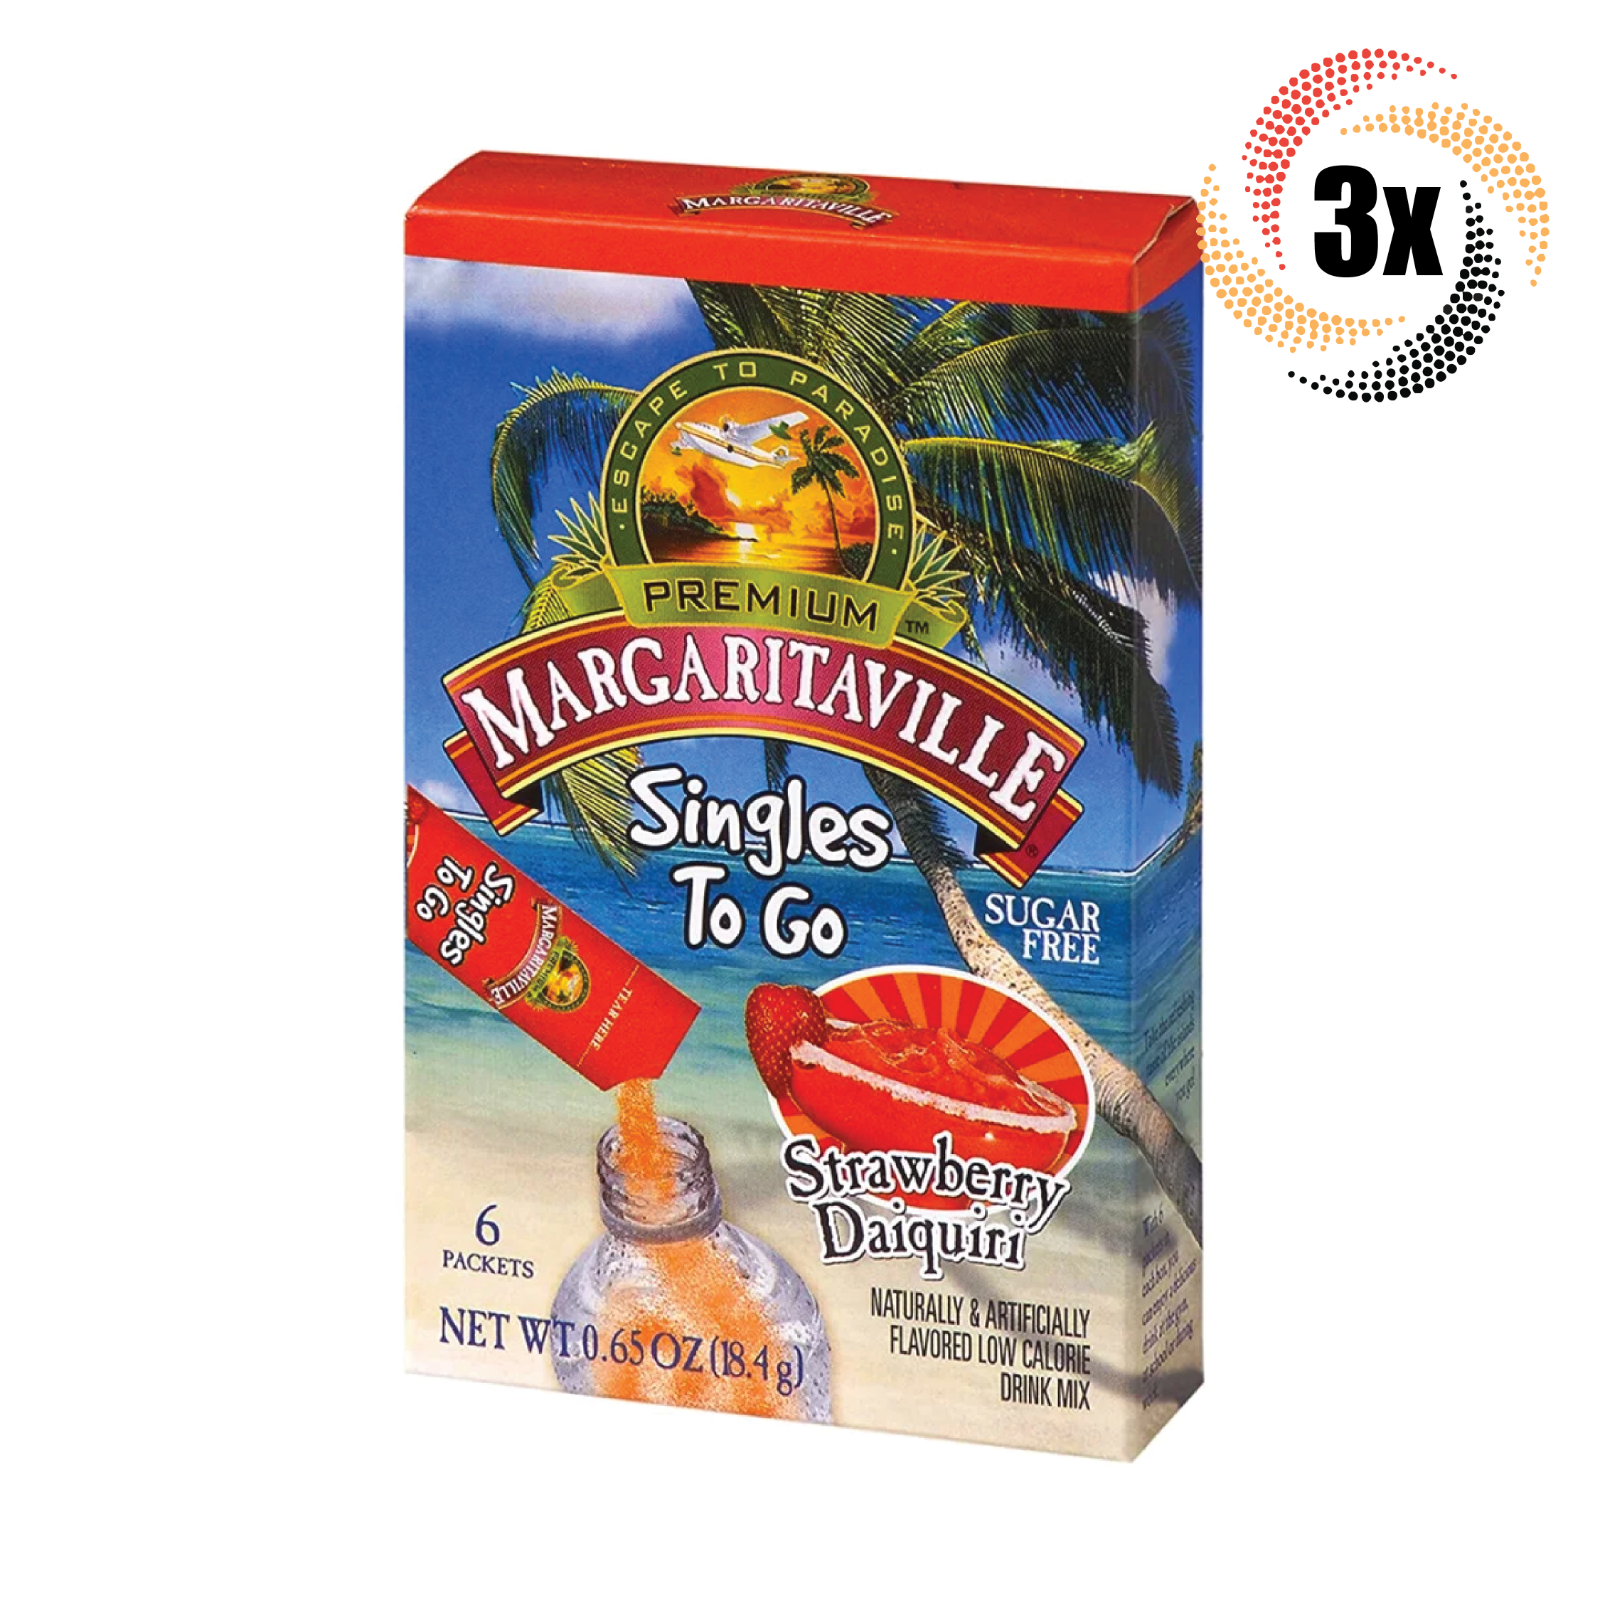 3x Packs Margaritaville Singles To Go Strawberry Daiquiri Dr